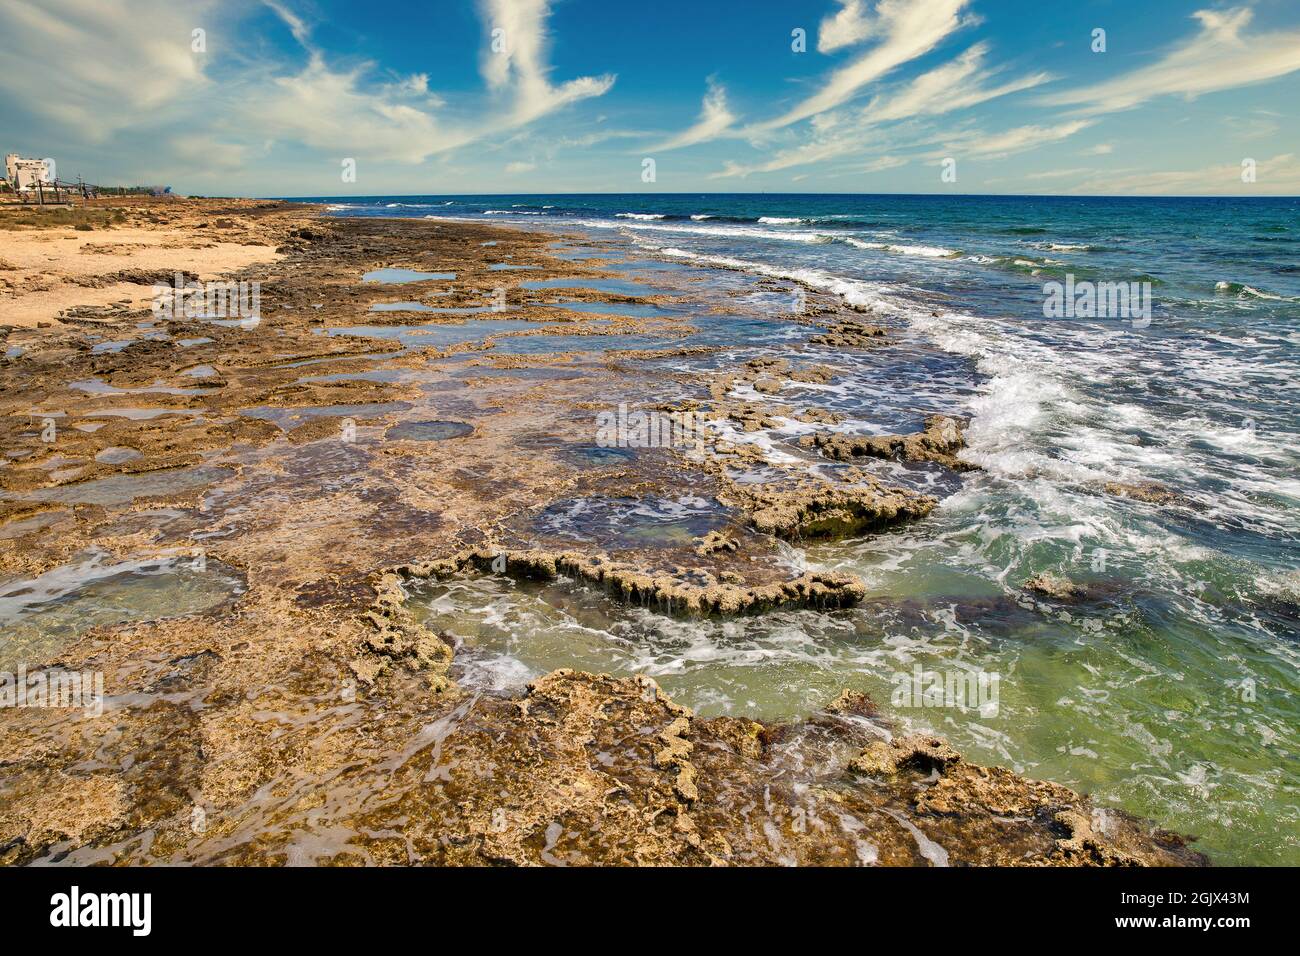 Ayia Napa summer resort rocky beach seafront, Cyprus. Stock Photo